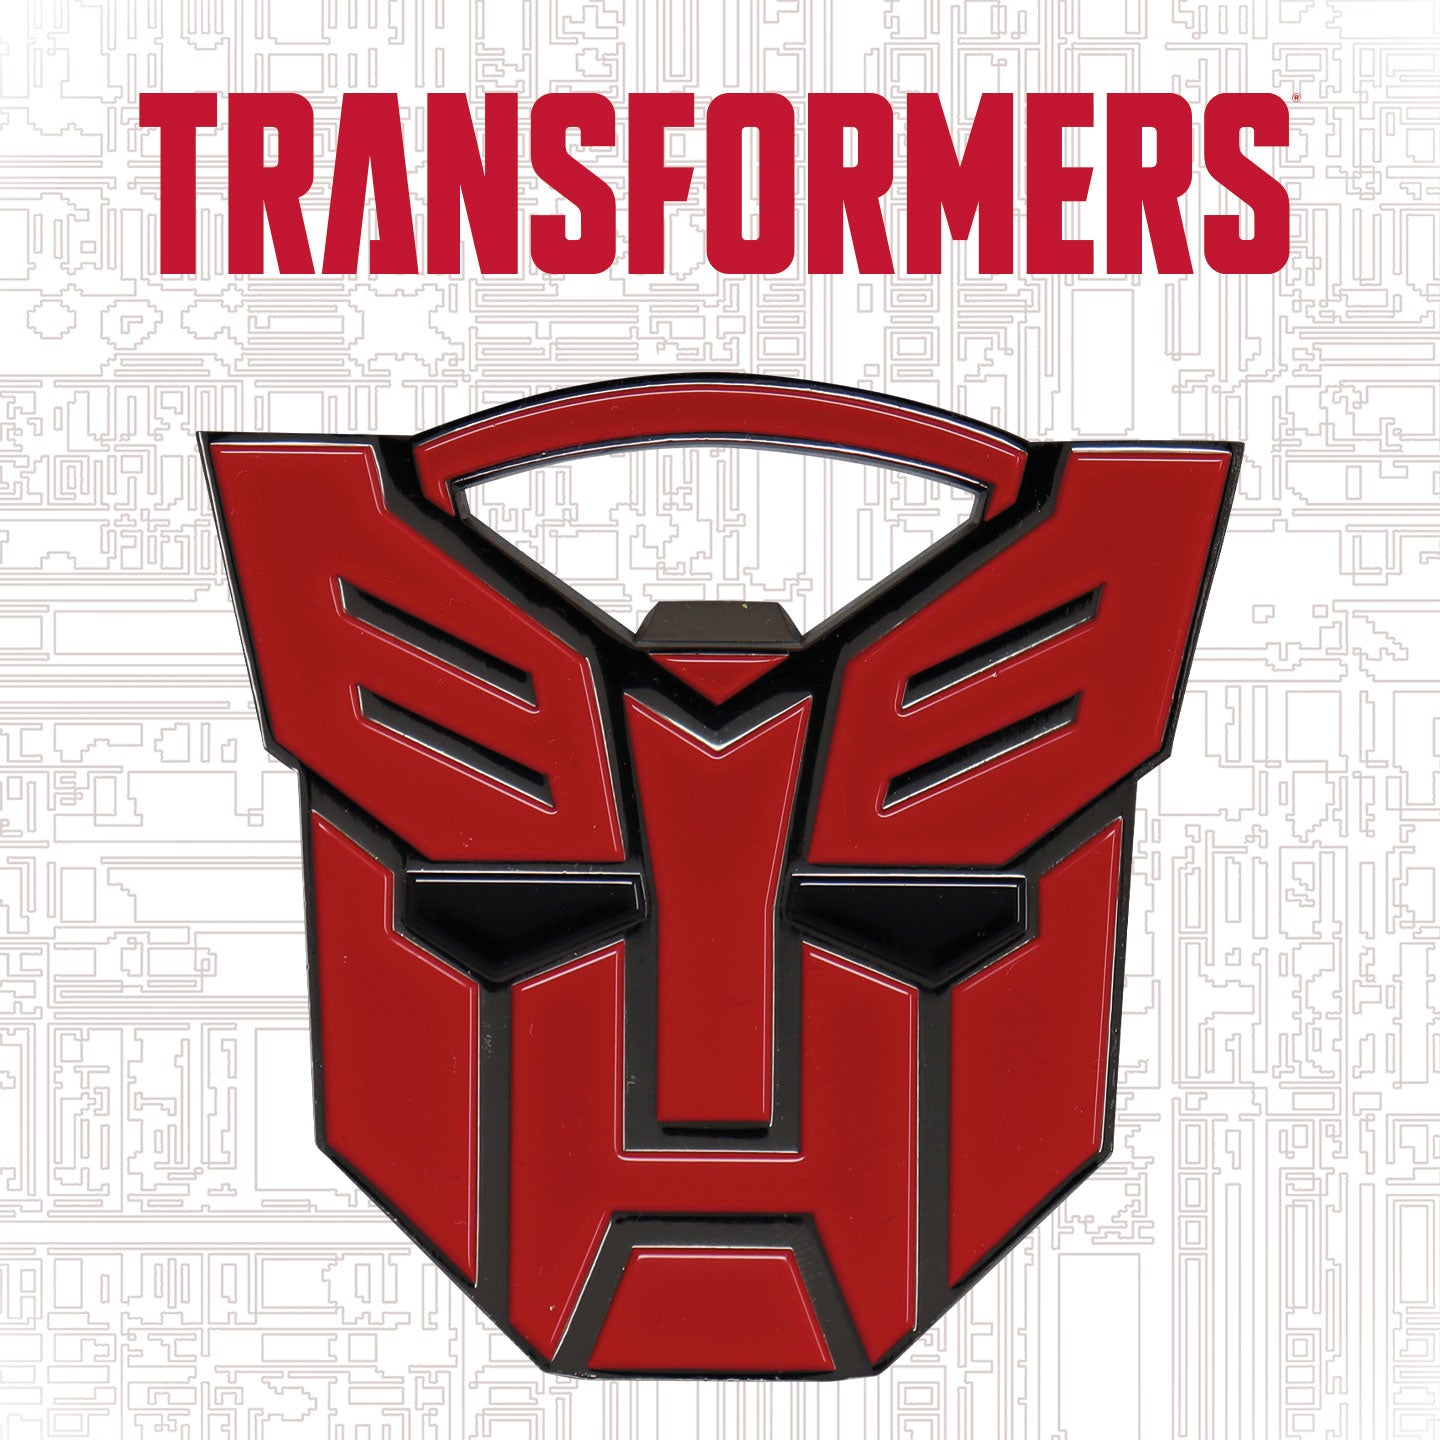 Transformers Autobots Bottle Opener